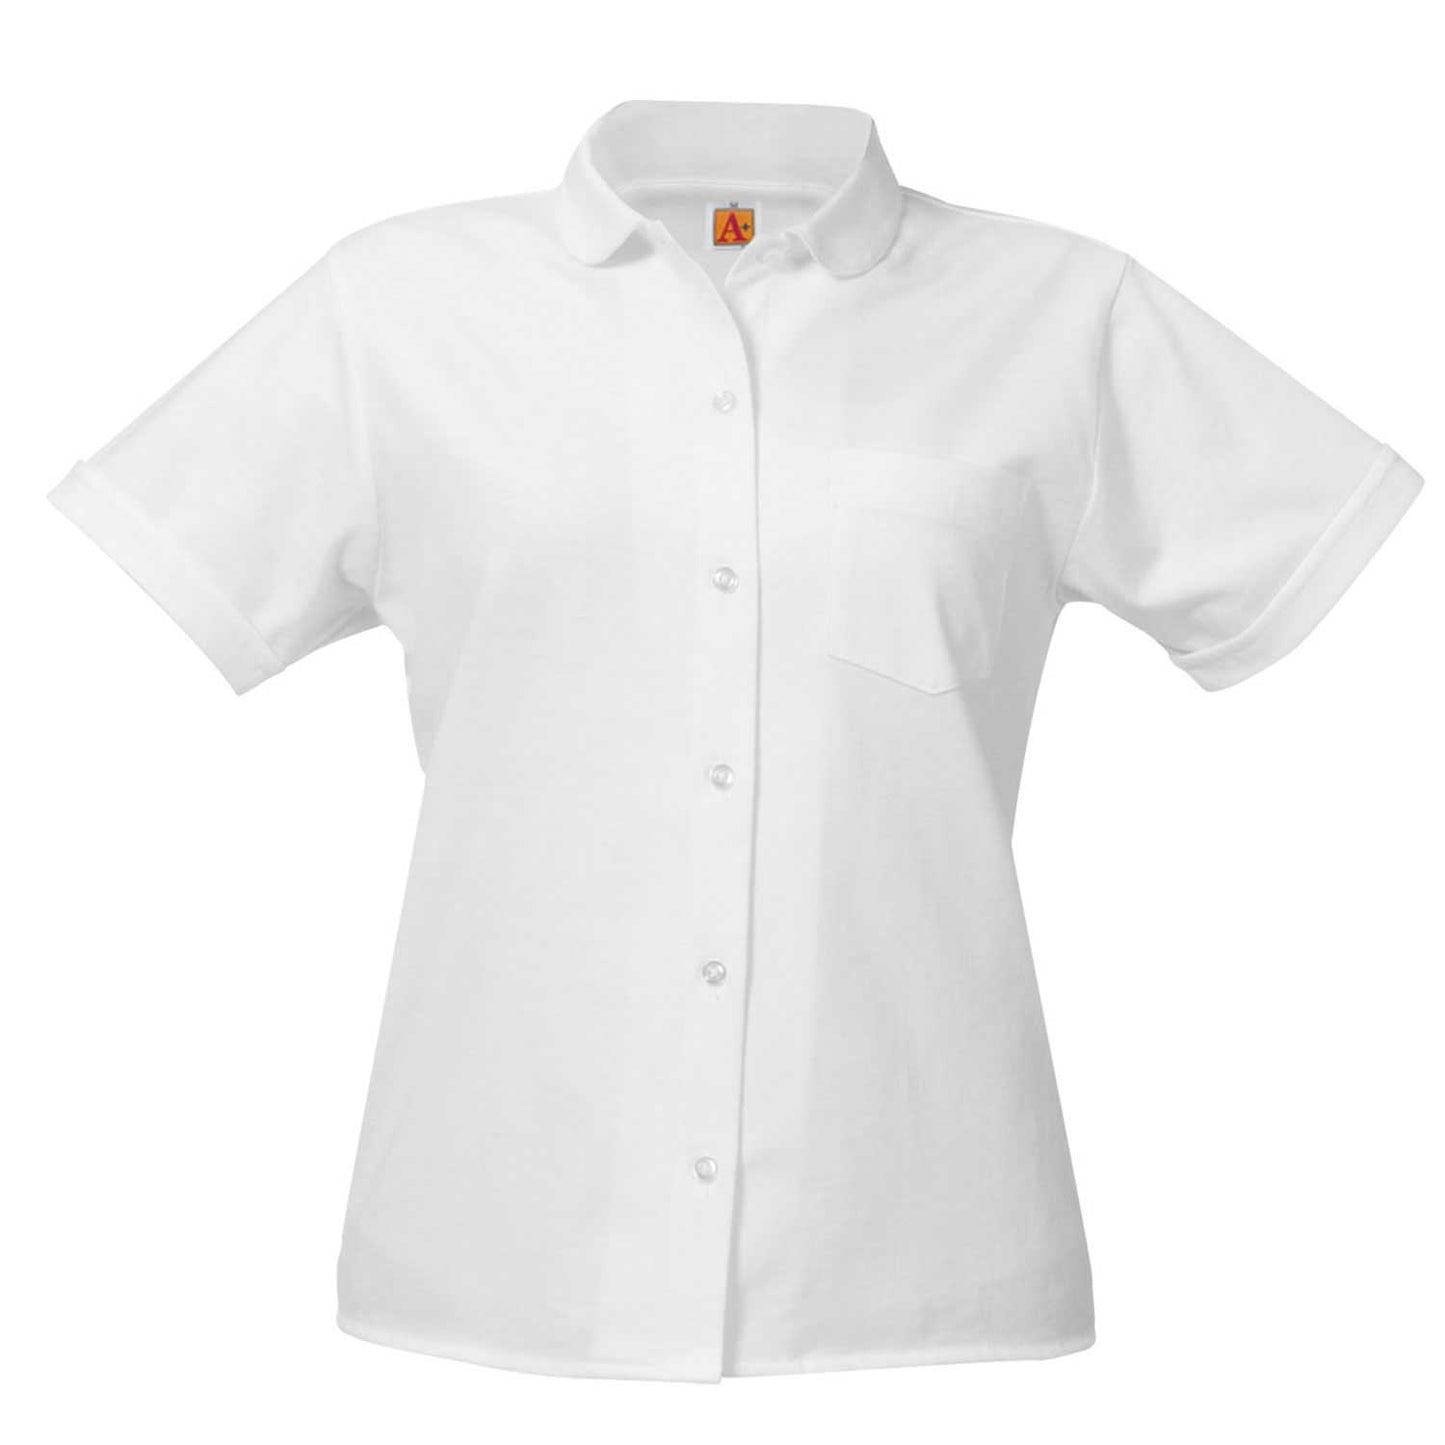 Jersey Knit Short Sleeve Shirt (Female) w/Logo - 1101